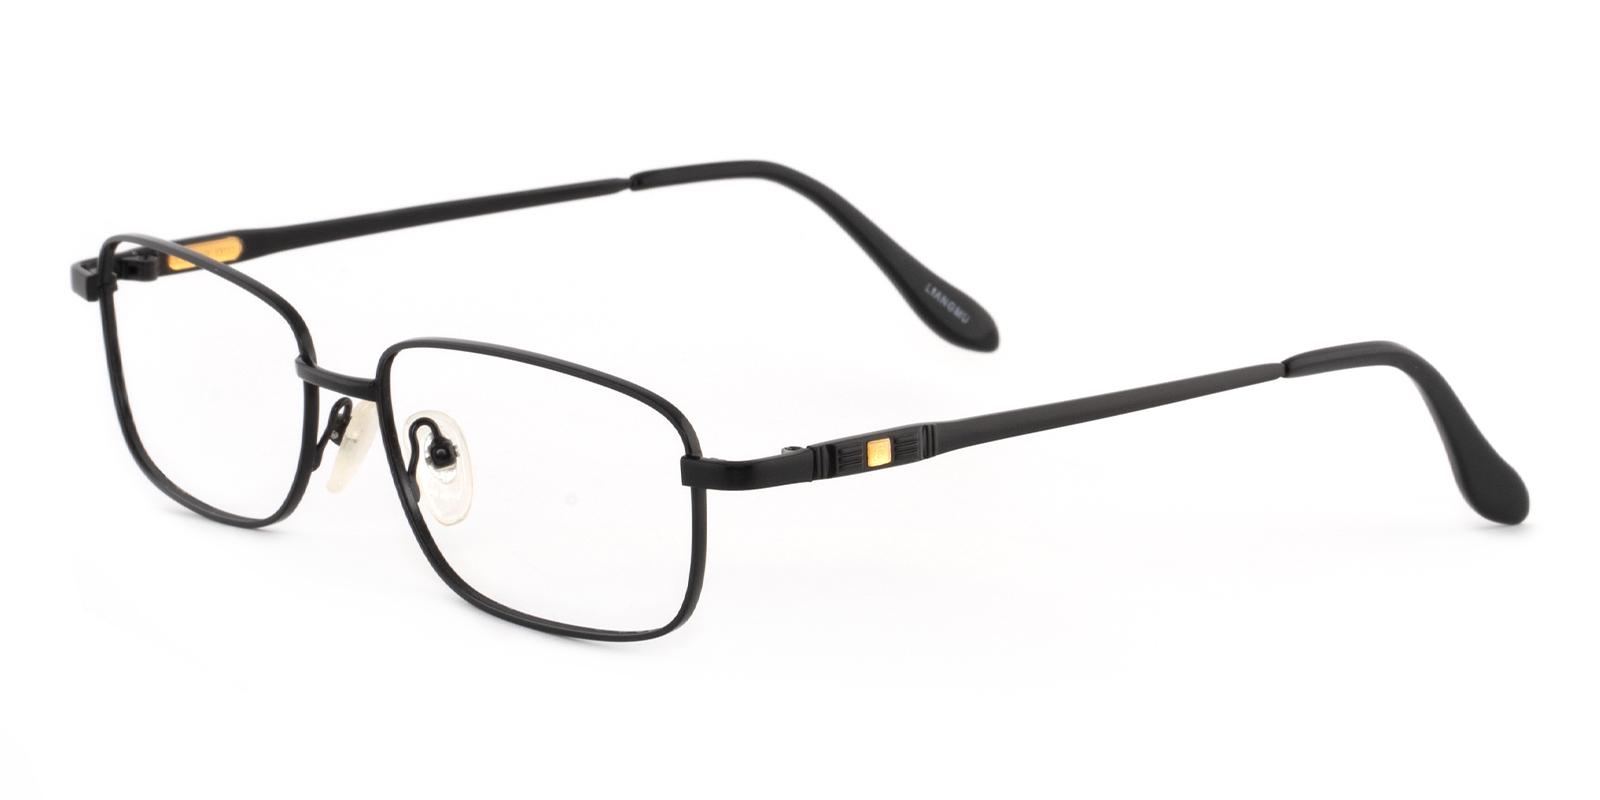 Aureate Black Metal Eyeglasses , NosePads Frames from ABBE Glasses